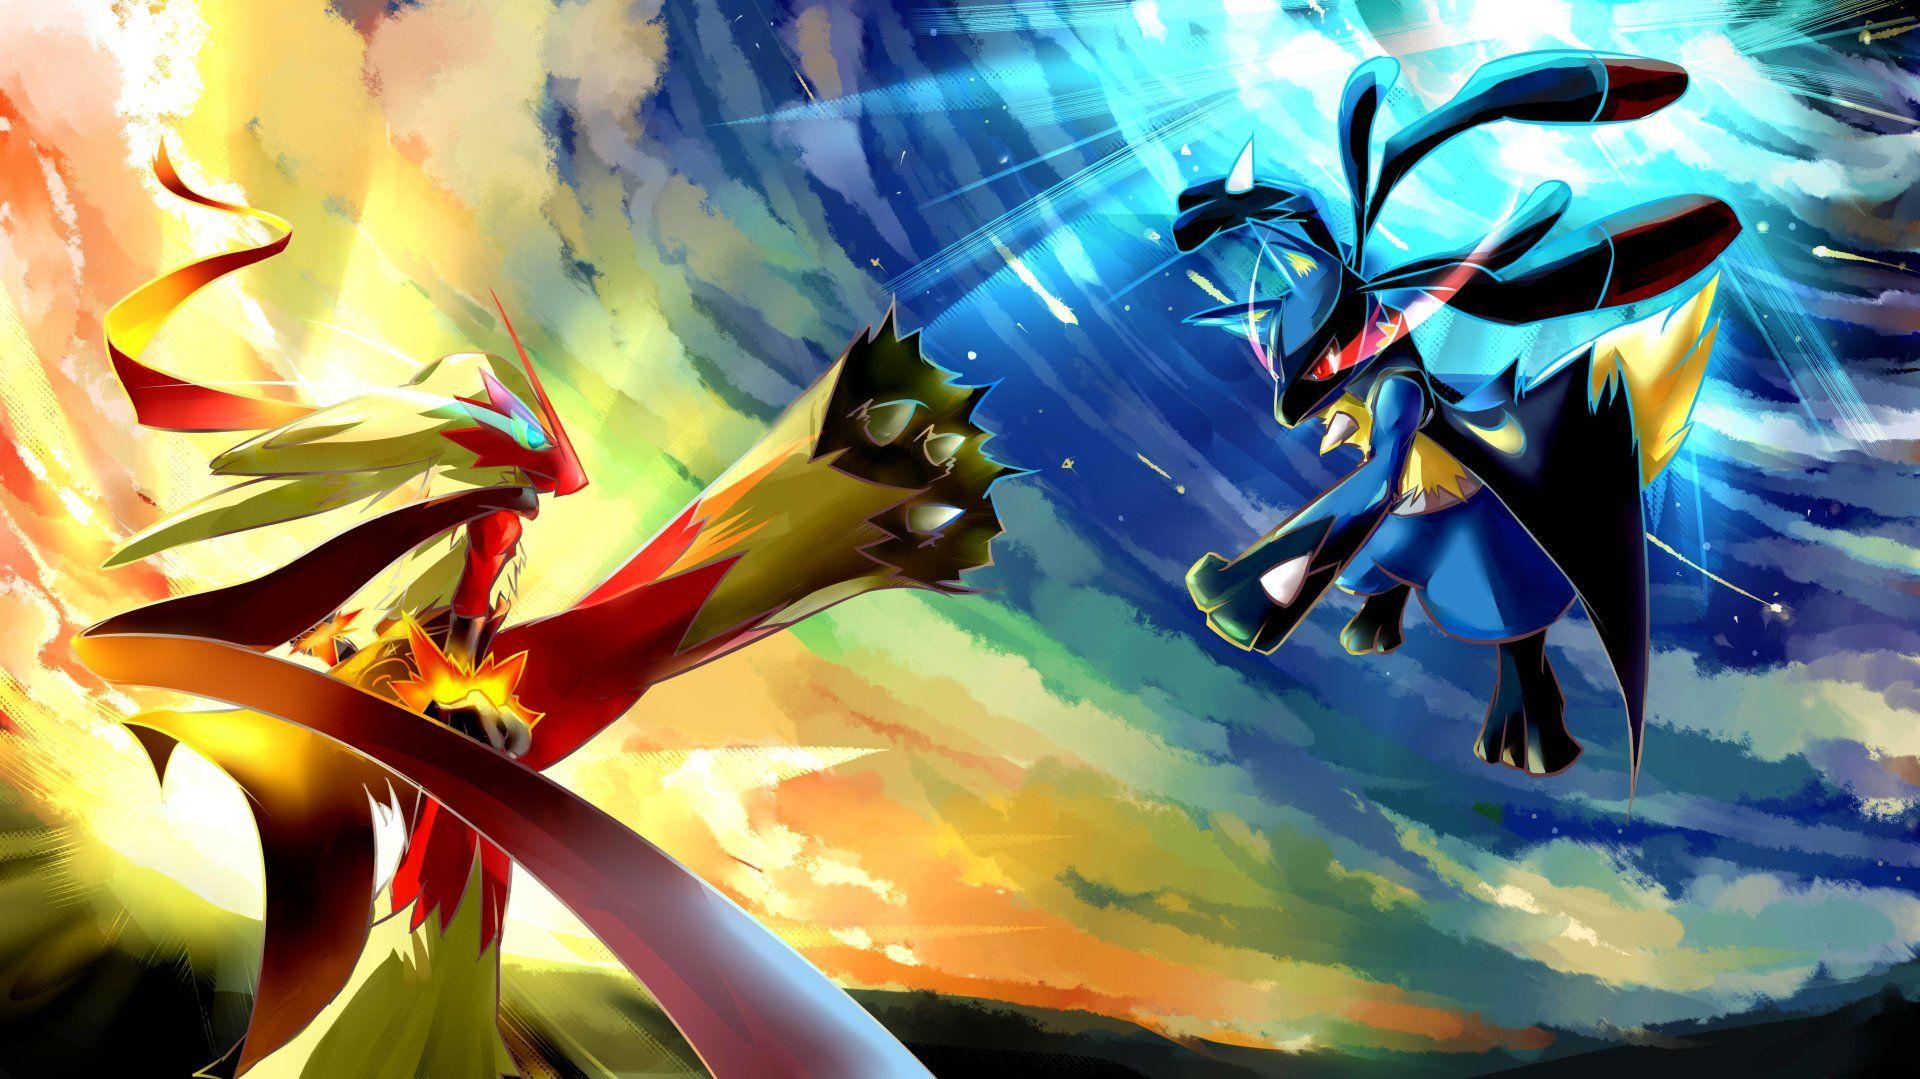 4K Ultra HD Pokémon Wallpaper and Background Image